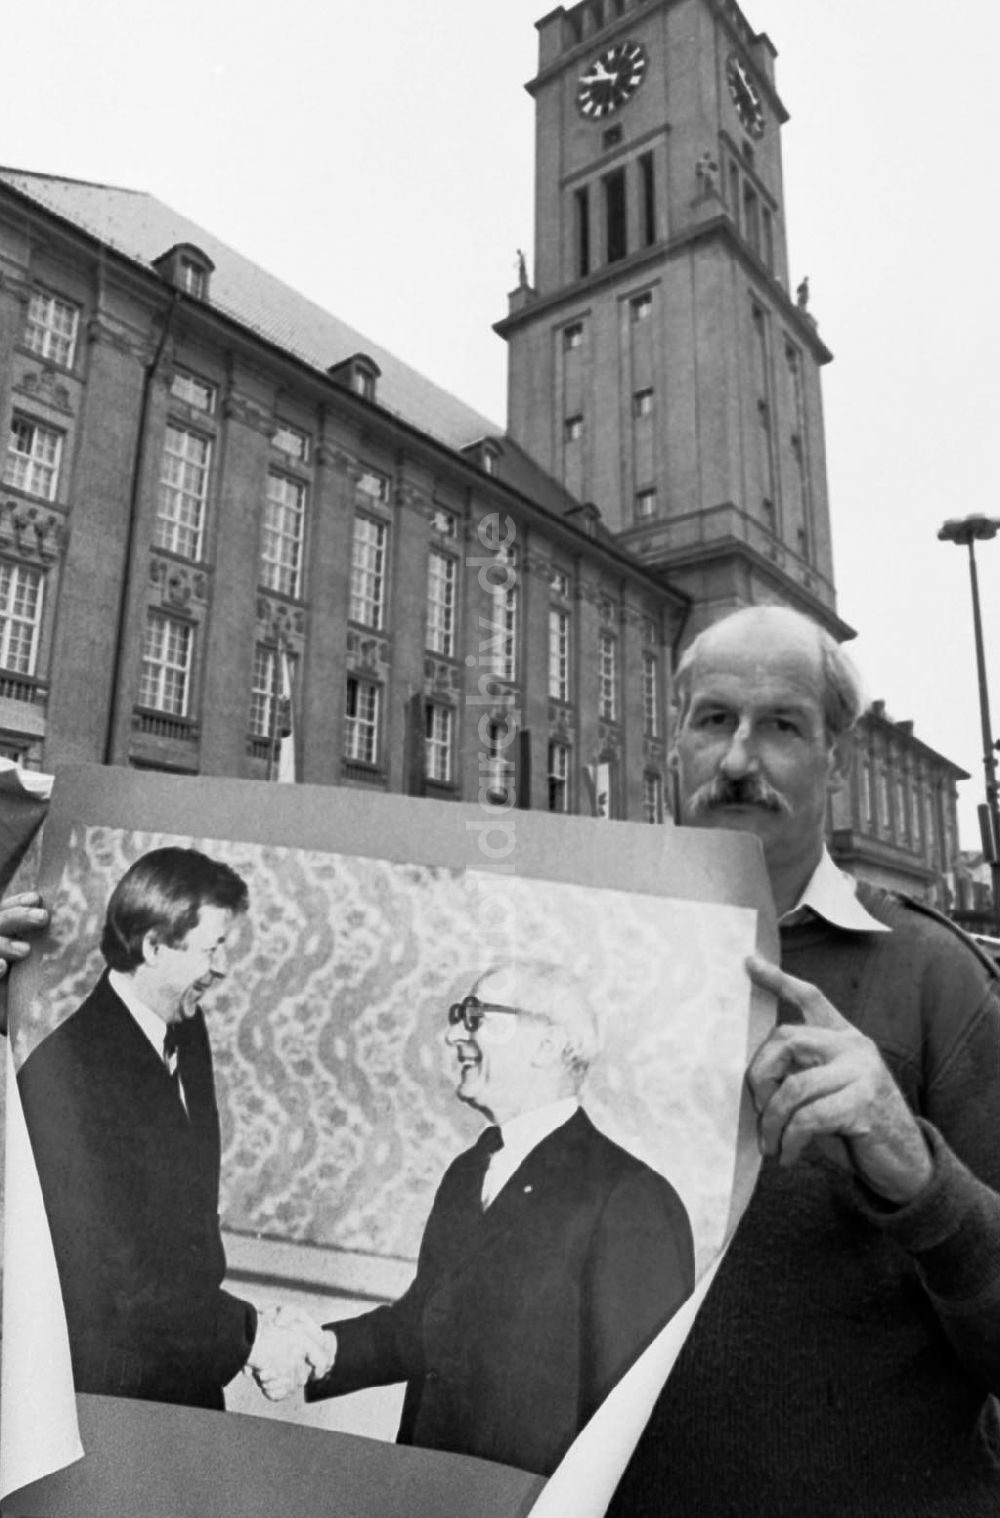 DDR-Bildarchiv: Berlin - Blumen-Händler verkauft Honecker-Diepgen-Poster